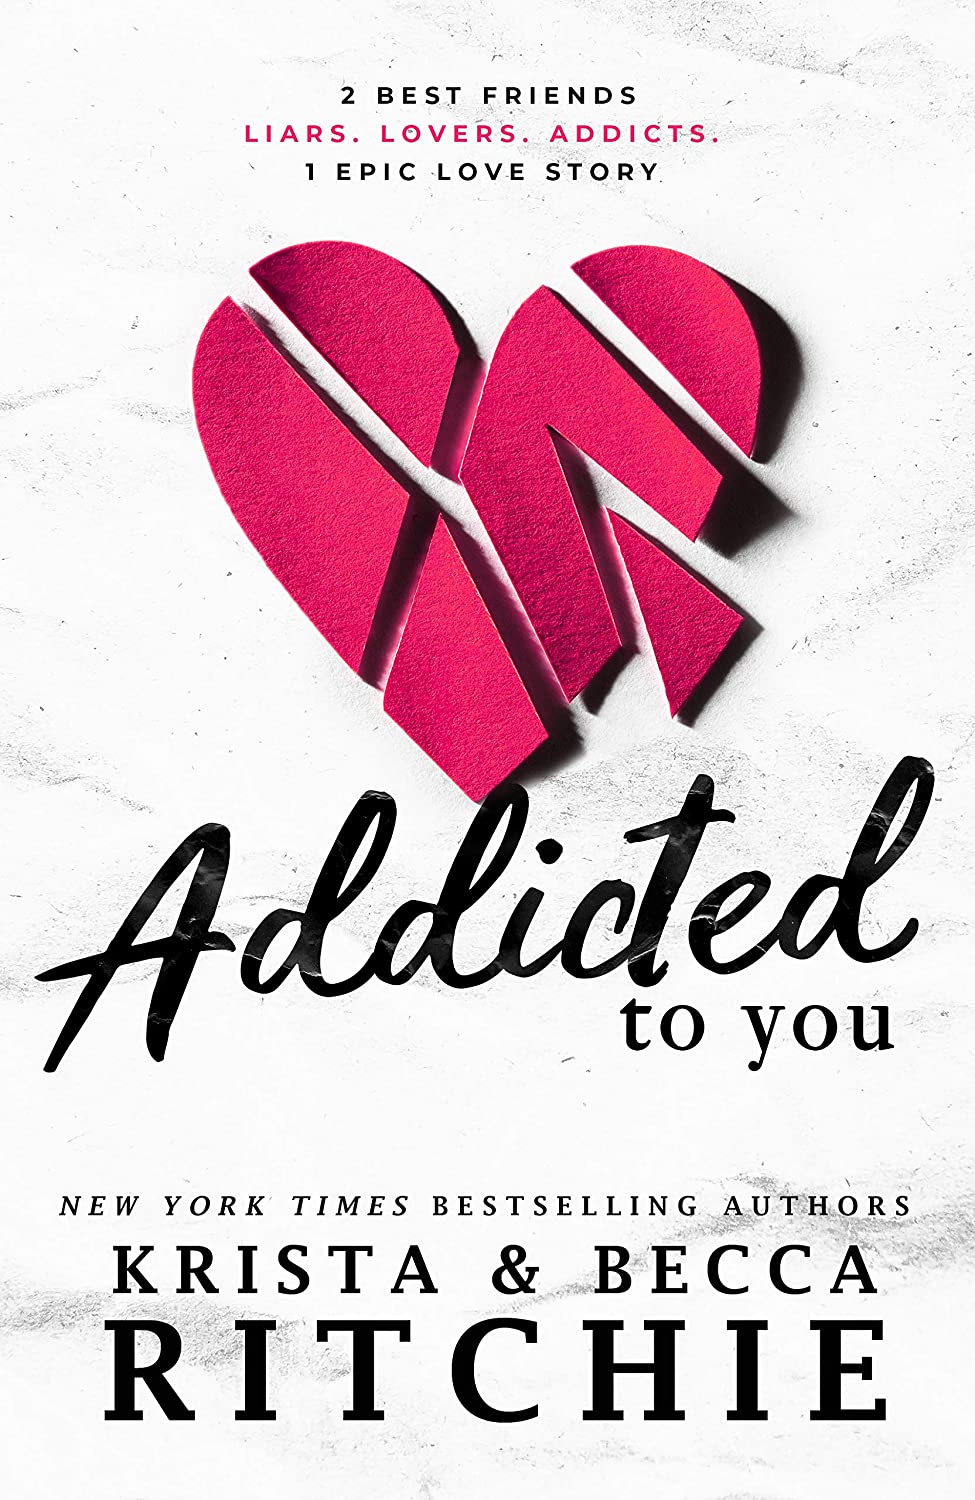 Krista Ritchie, Becca Ritchie: Addicted to You (2013, K.B. Ritchie)